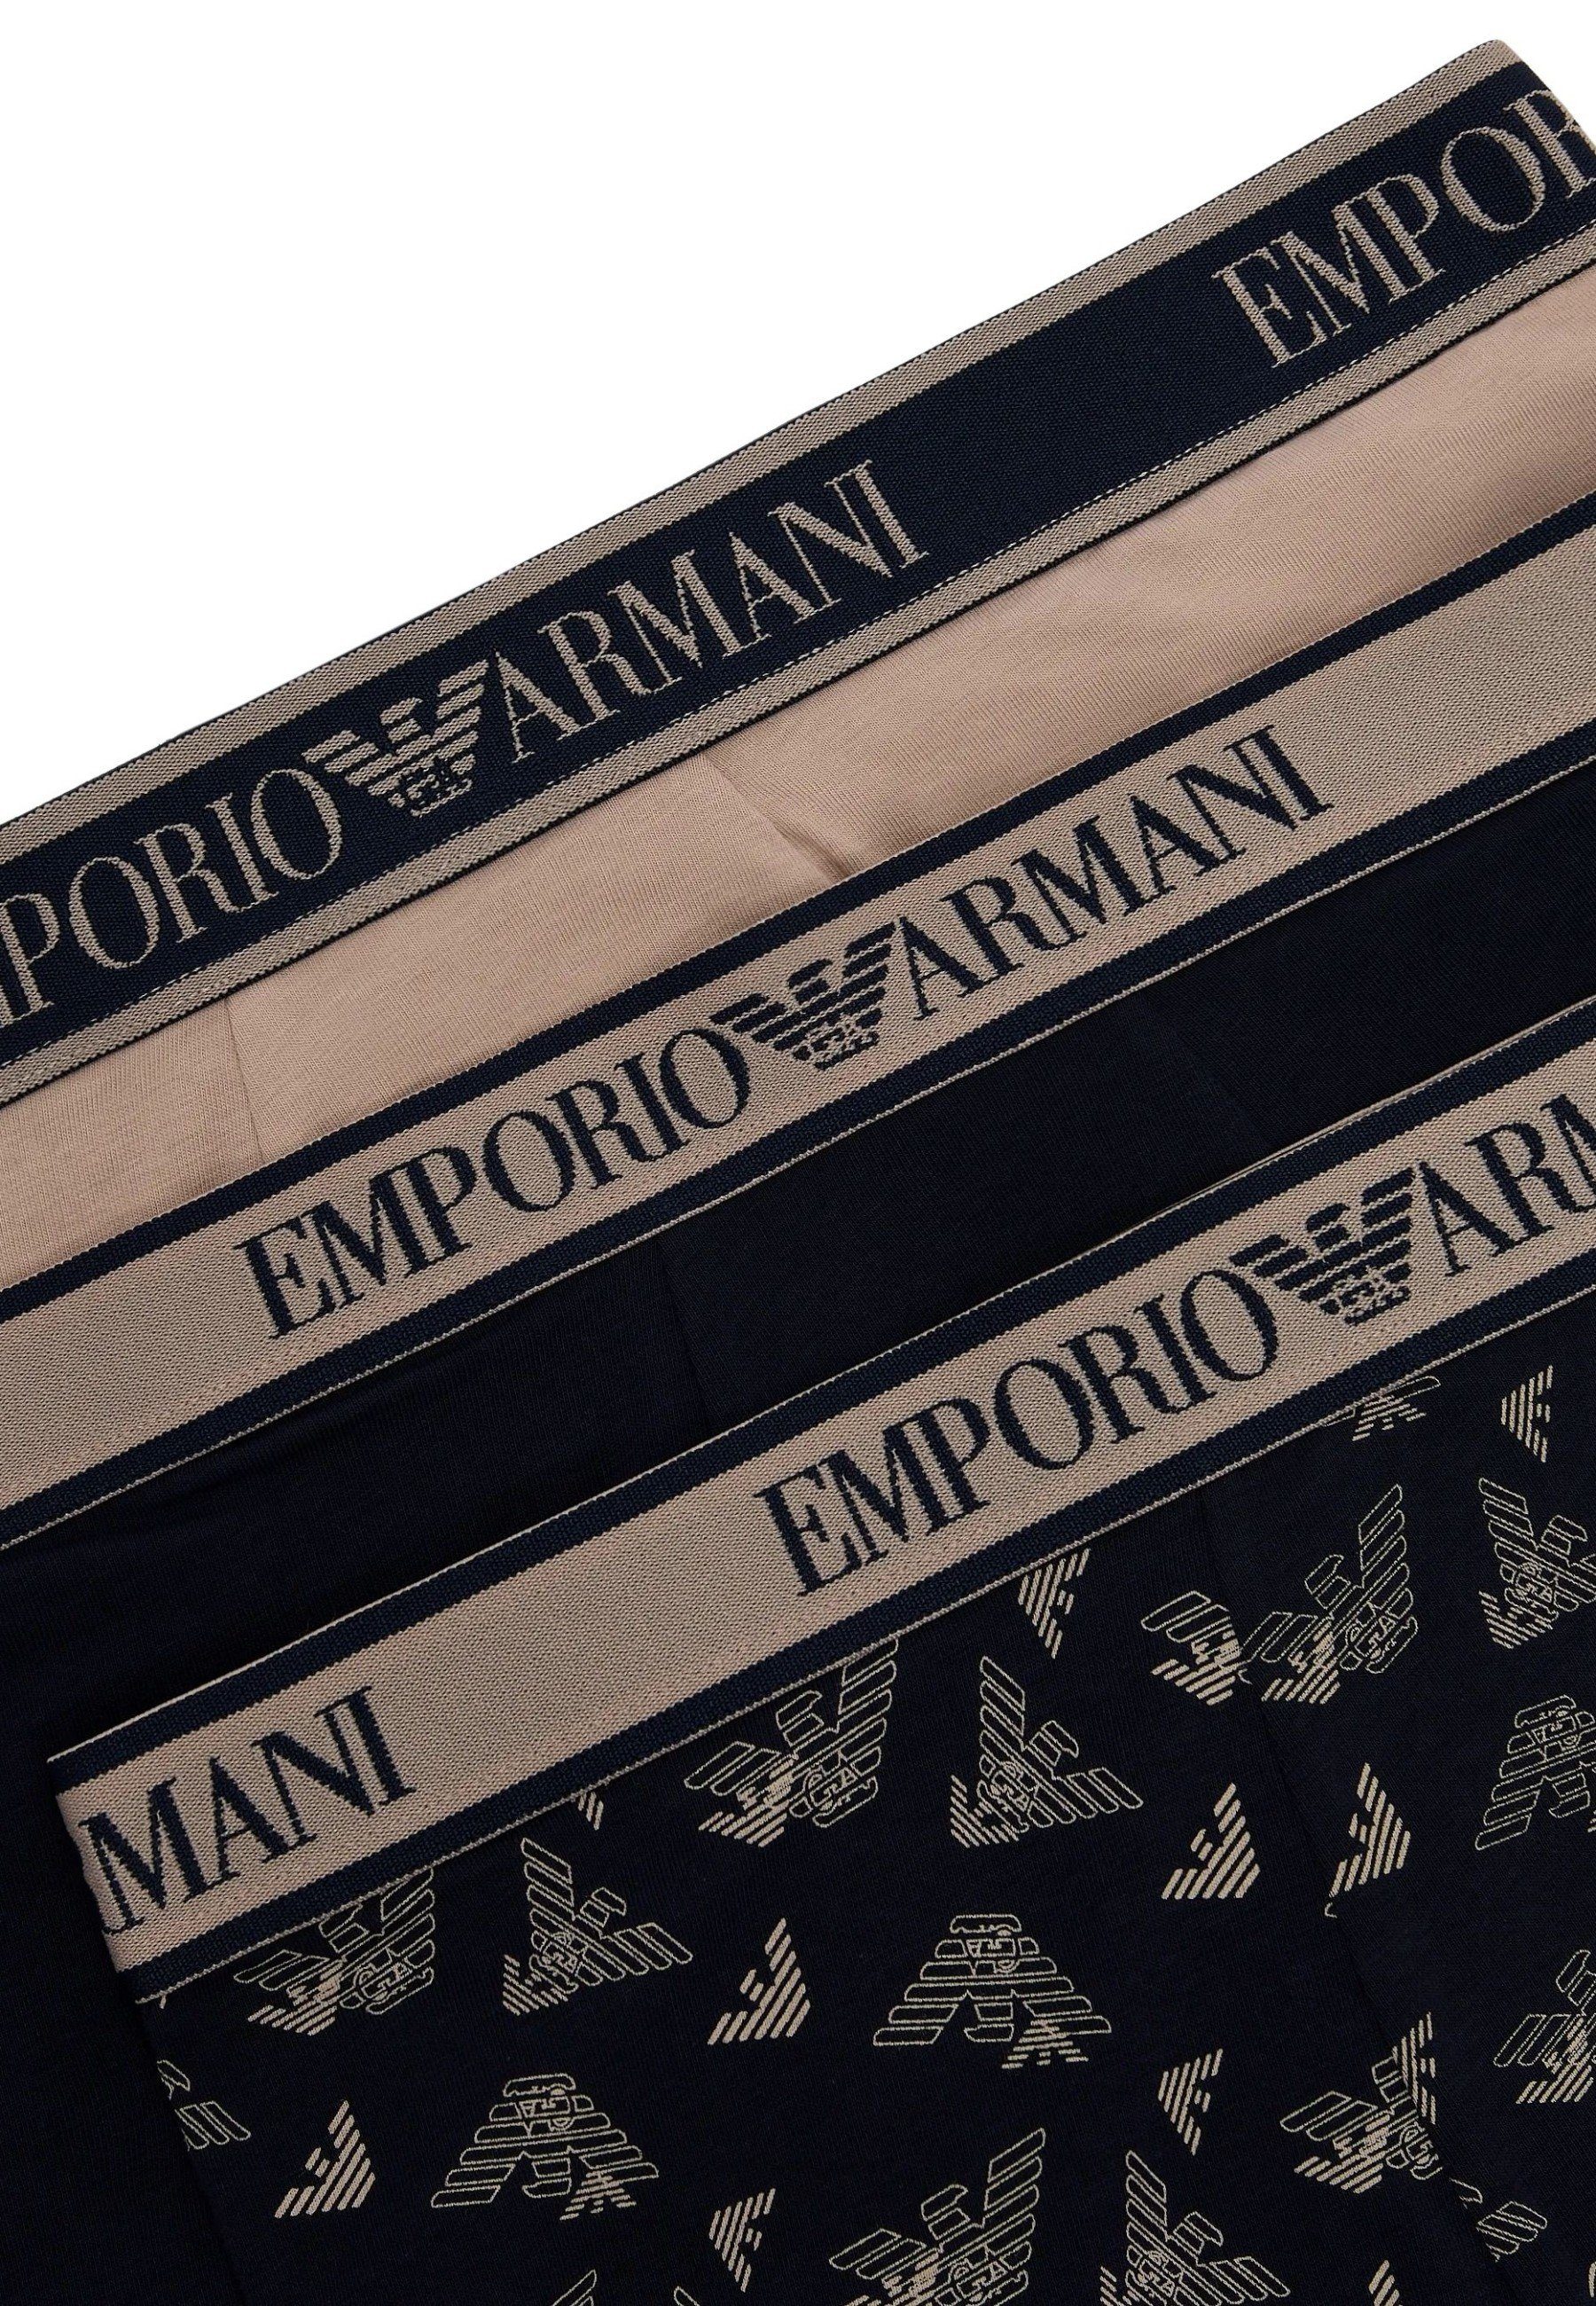 Shorts Emporio Knit Armani 3 Boxershorts Pack (3-St) Trunks Beige/Marine